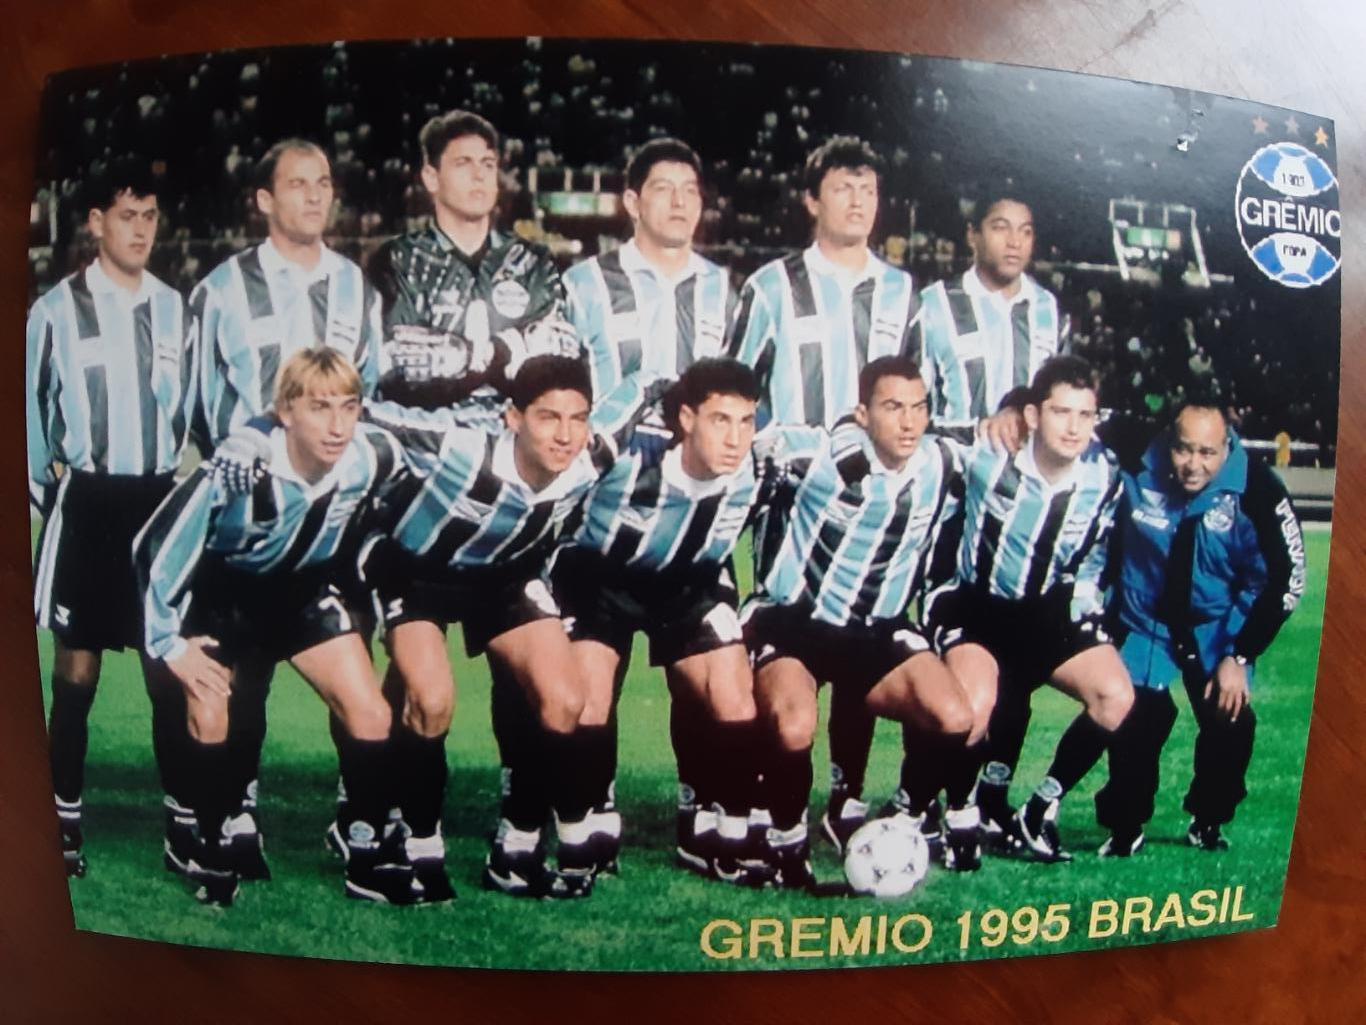 GREMIO 1995 (BRAZIL)